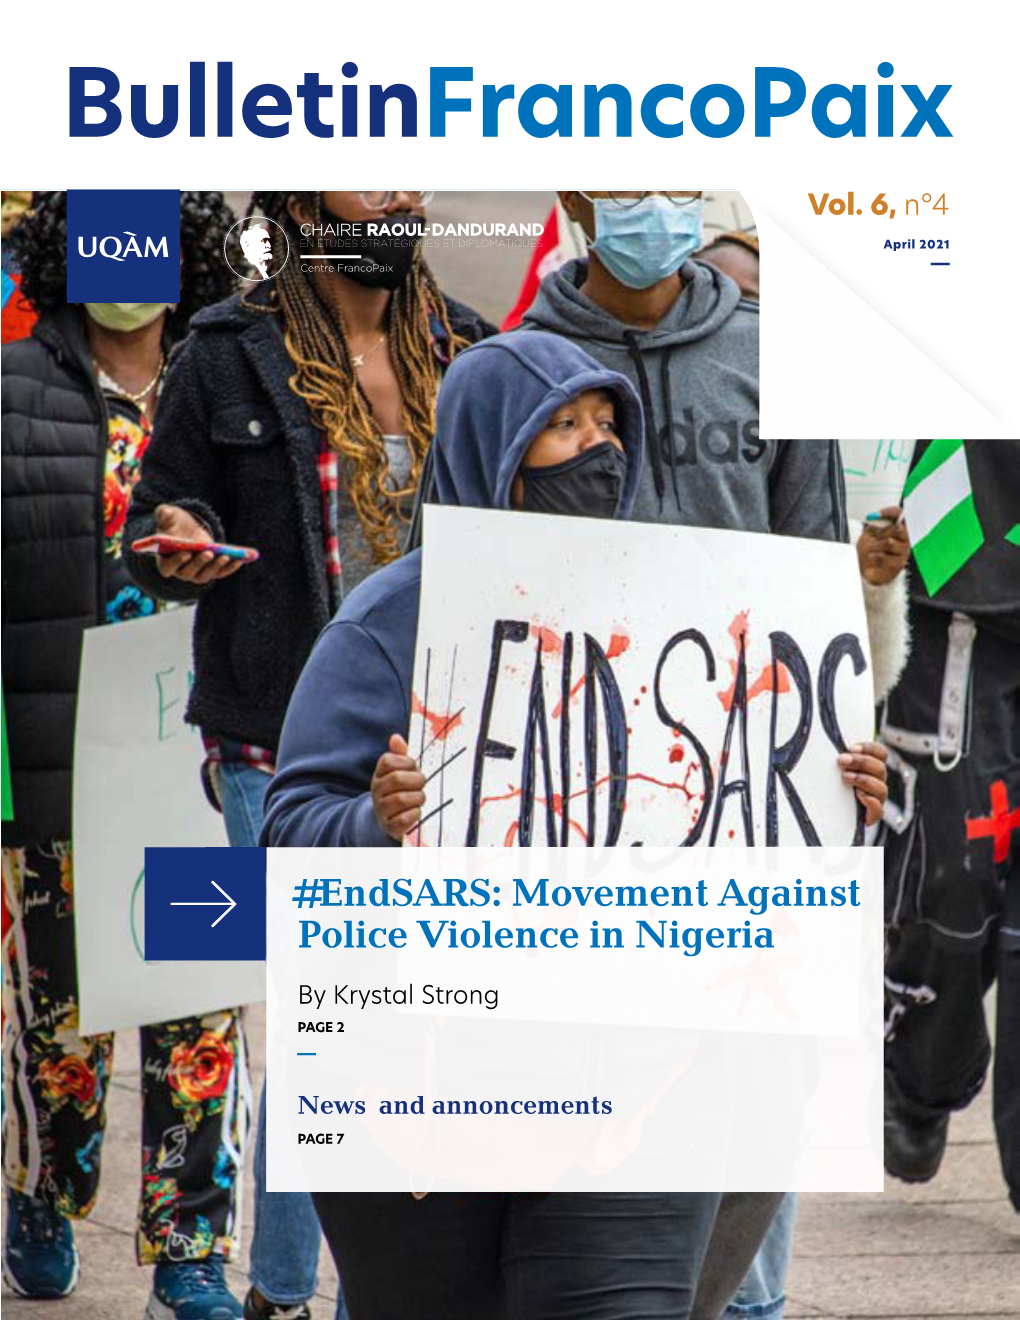 Bulletinfrancopaix #Endsars: Movement Against Police Violence